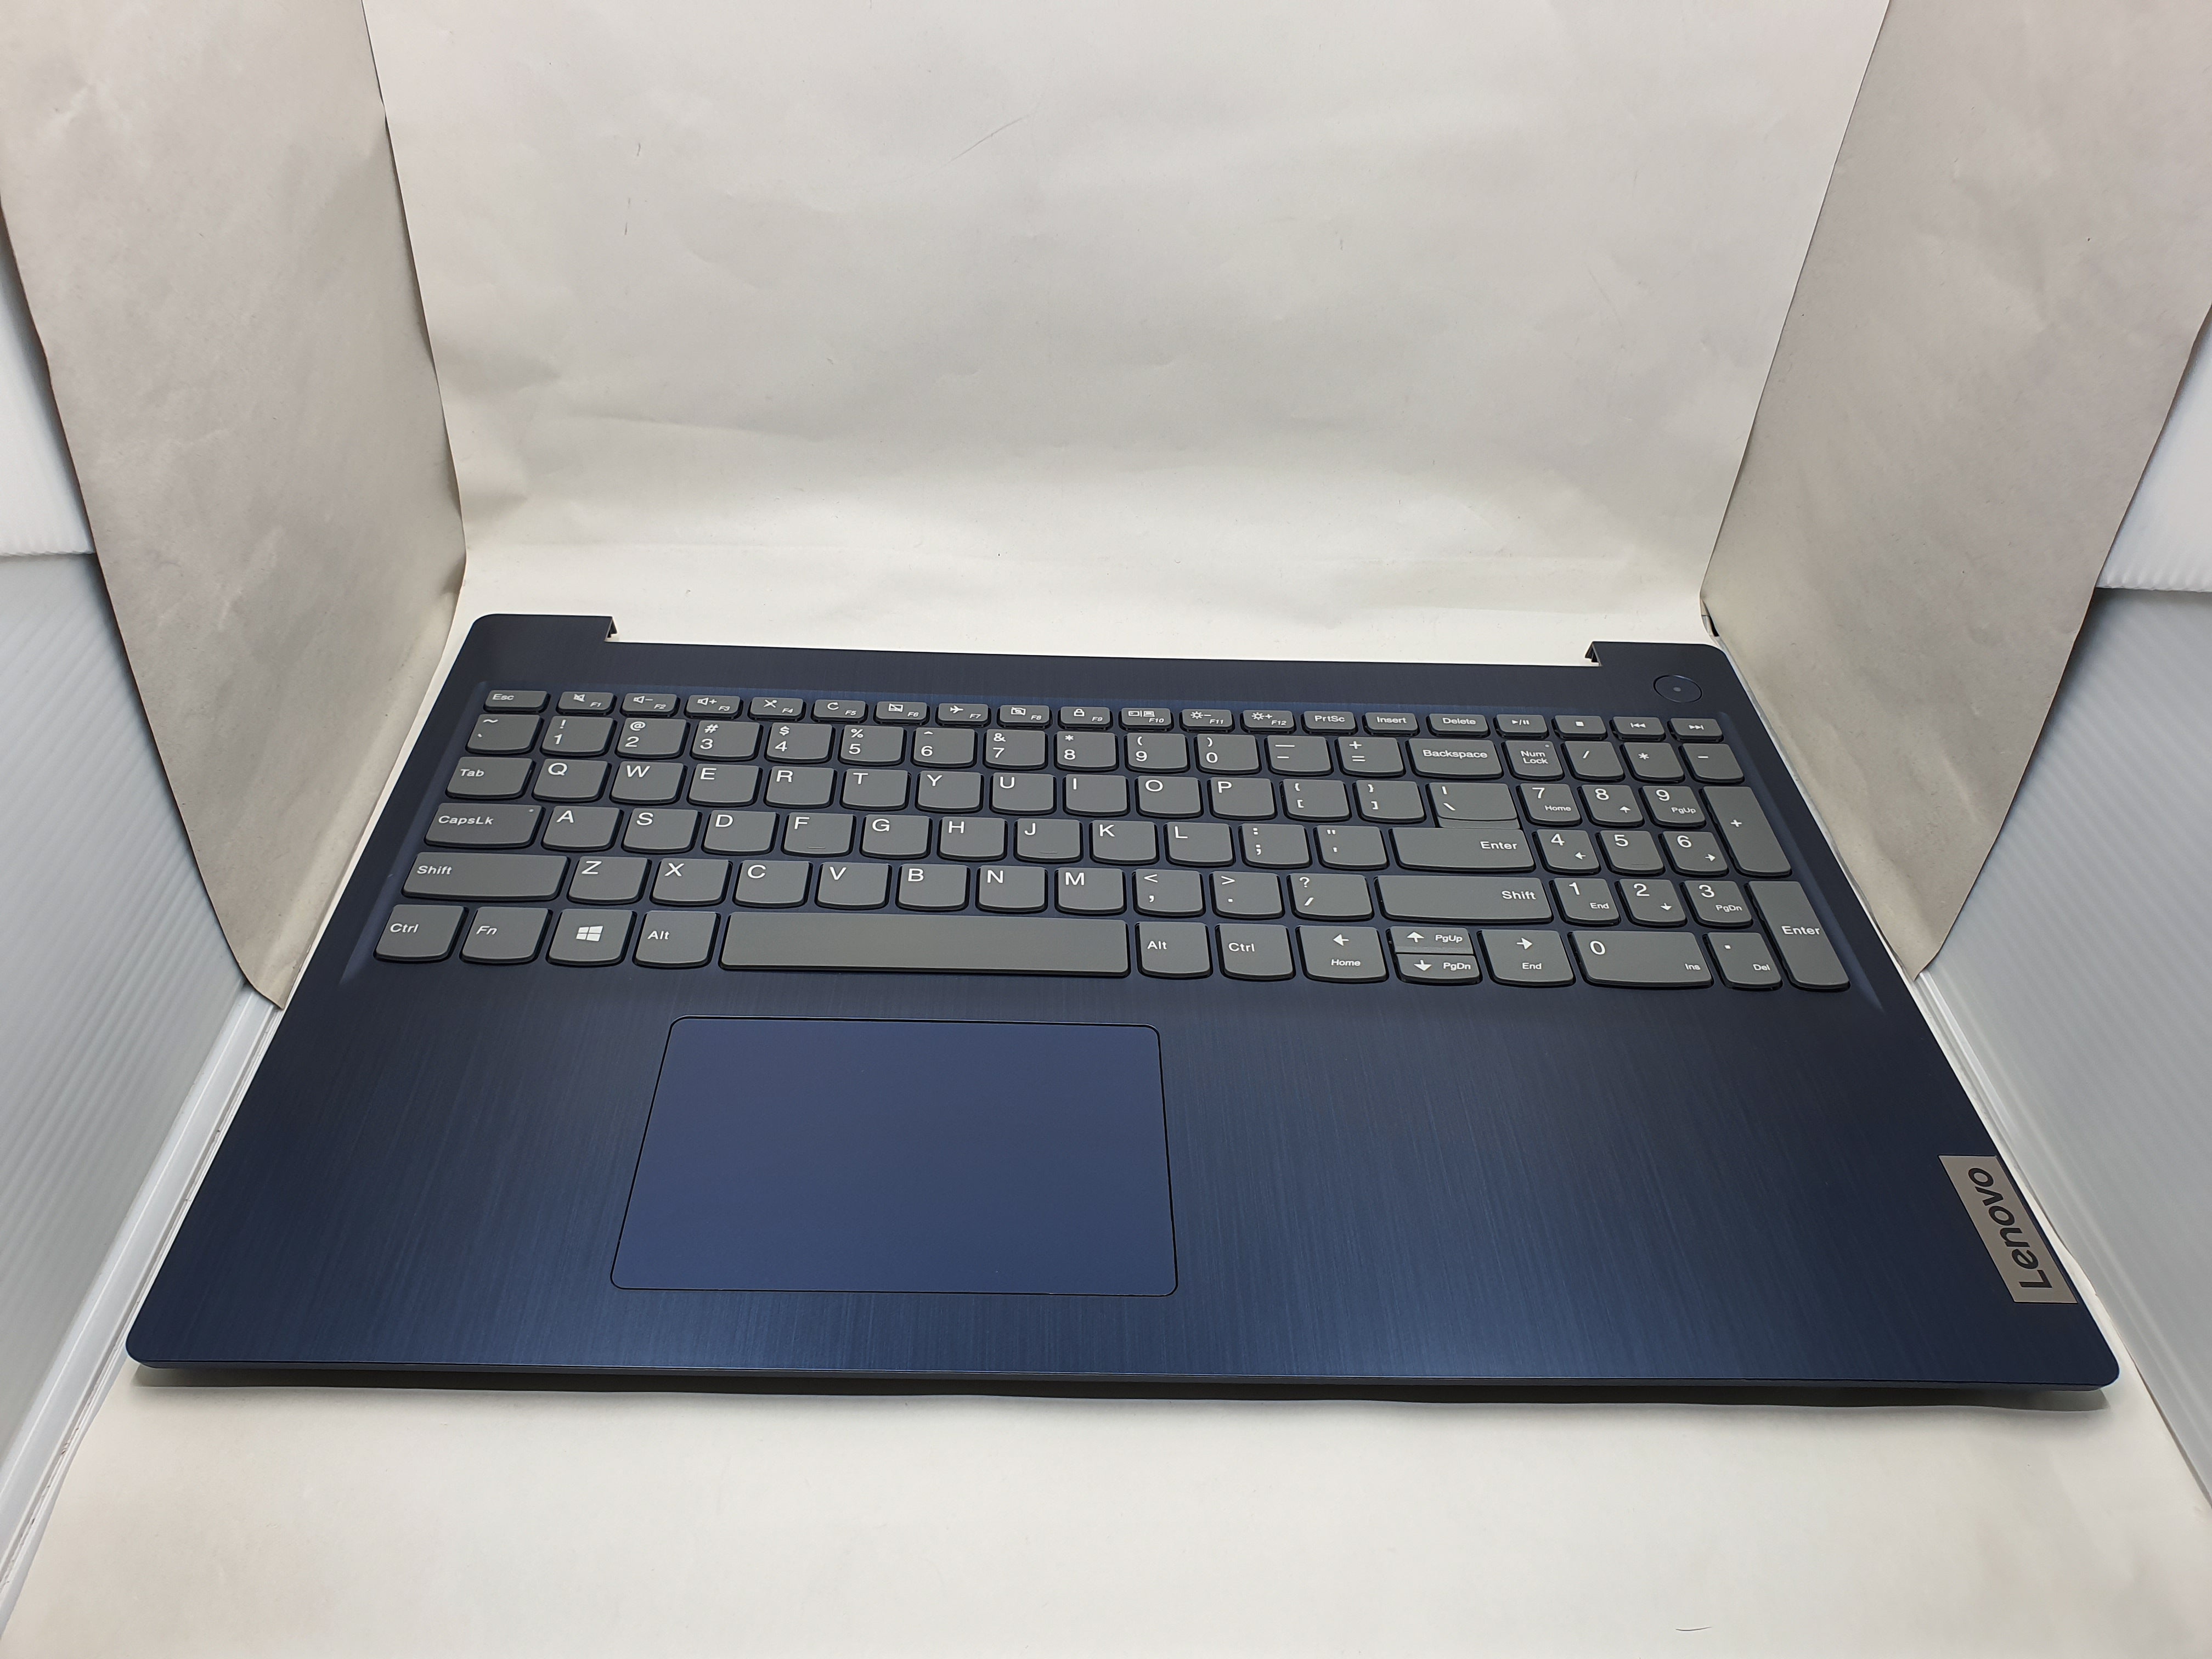 Lenovo Keyboard IdeaPad 3-15IML05 WL for Lenovo IdeaPad 3-15IML05